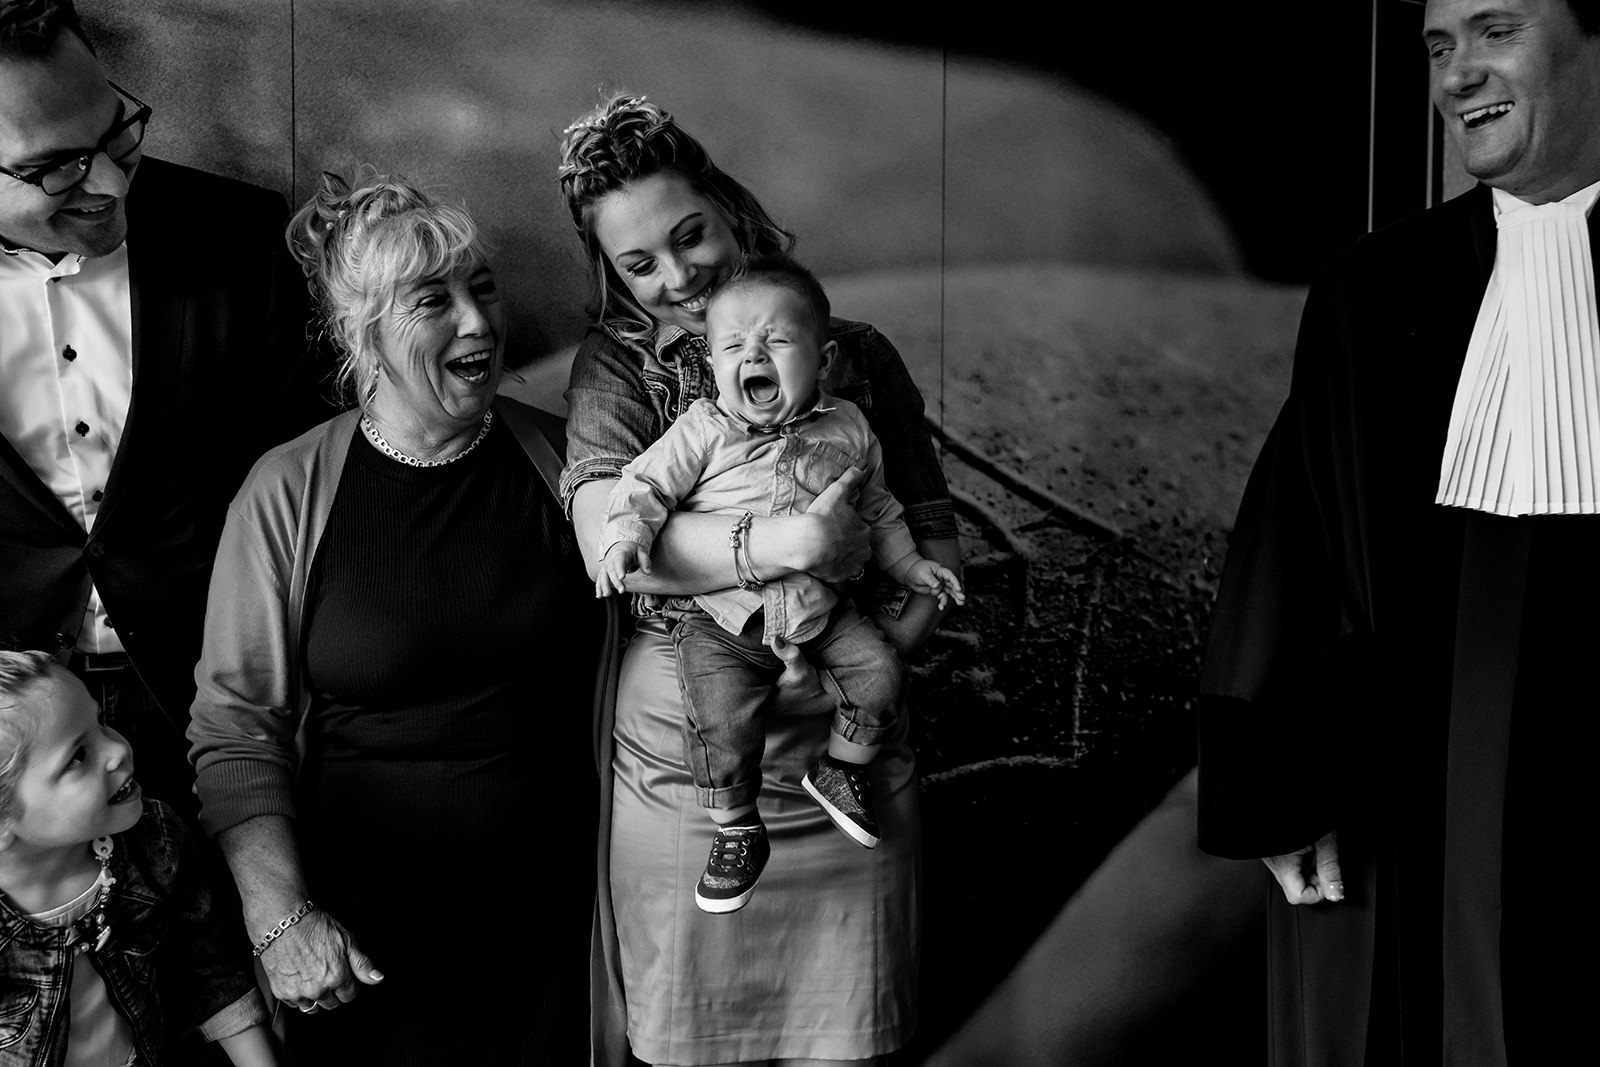 Bruidsfotograaf Nederland, zwart-wit fotografie